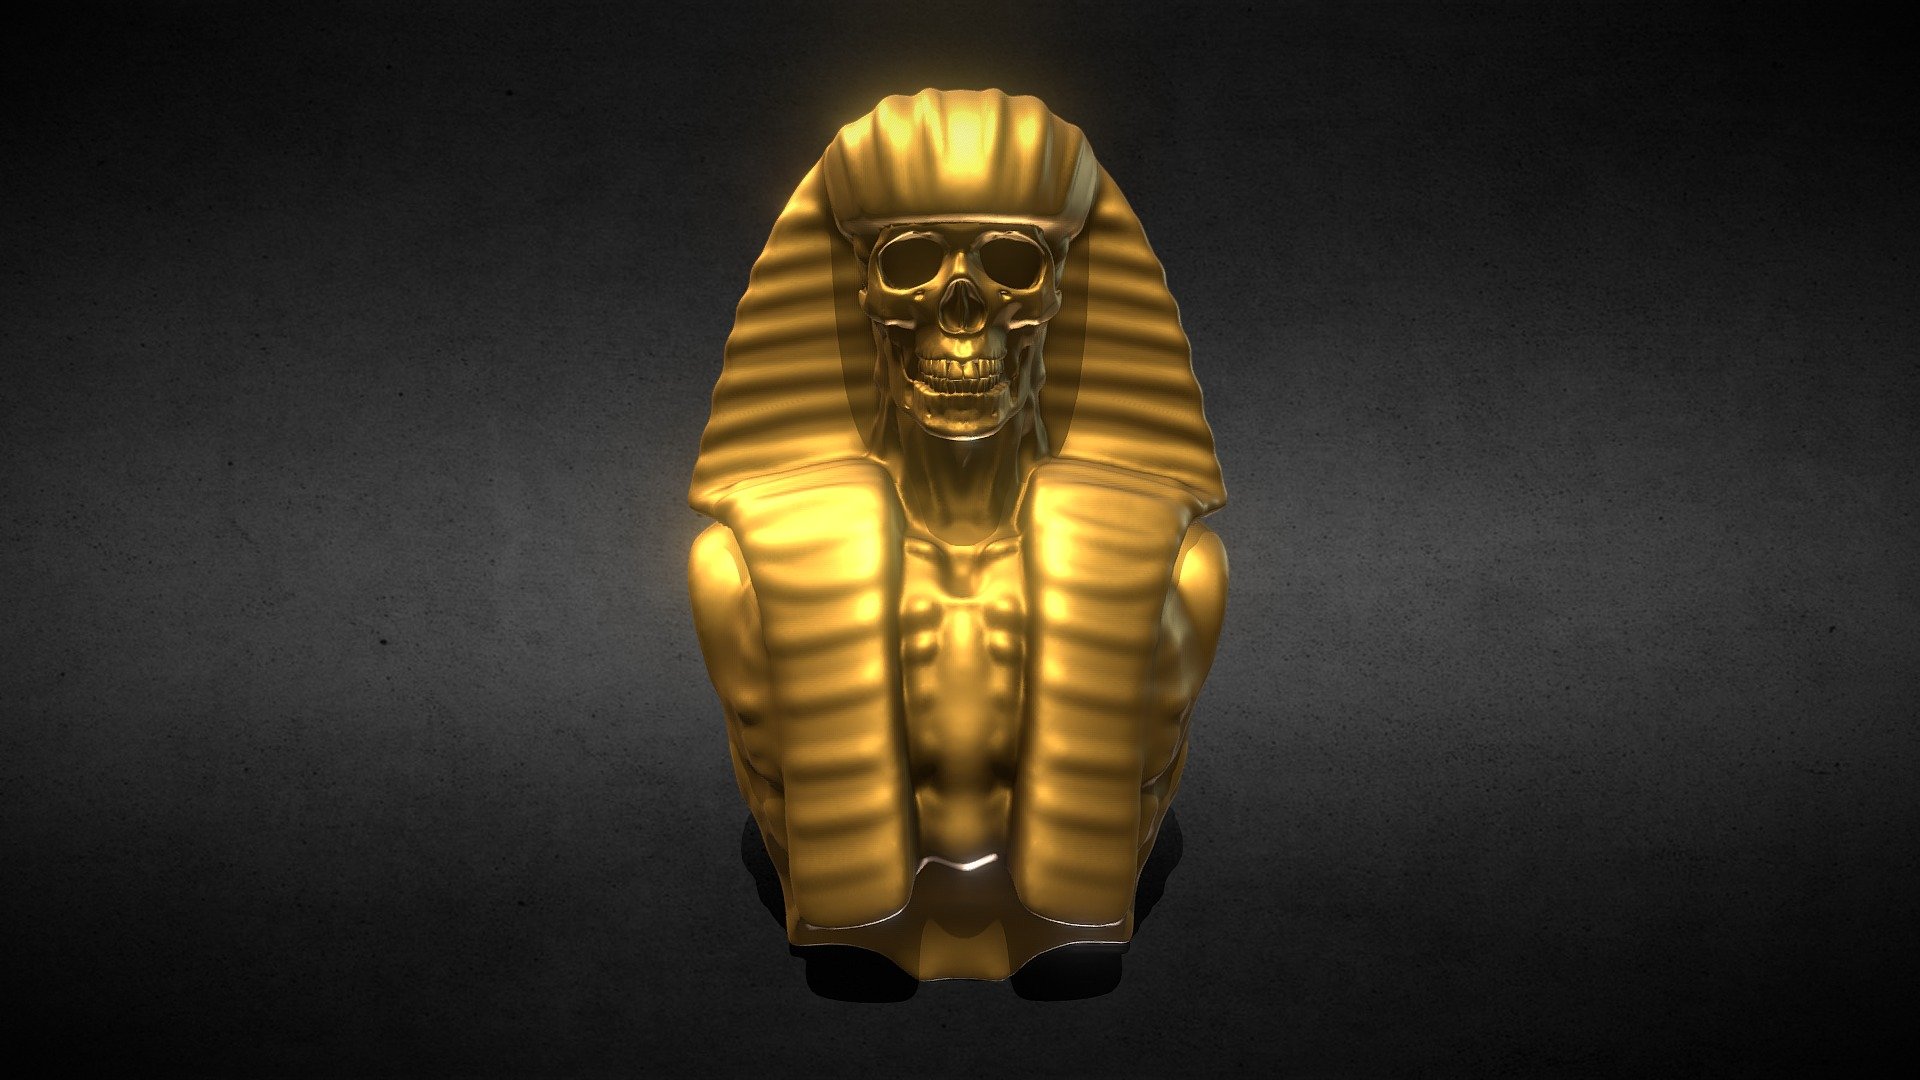 Day 26 - Cursed Treasure
Death to thieves  

@sculptjanuary - Day 26 - Cursed Treasure - Buy Royalty Free 3D model by 3DGuimaraes 3d model